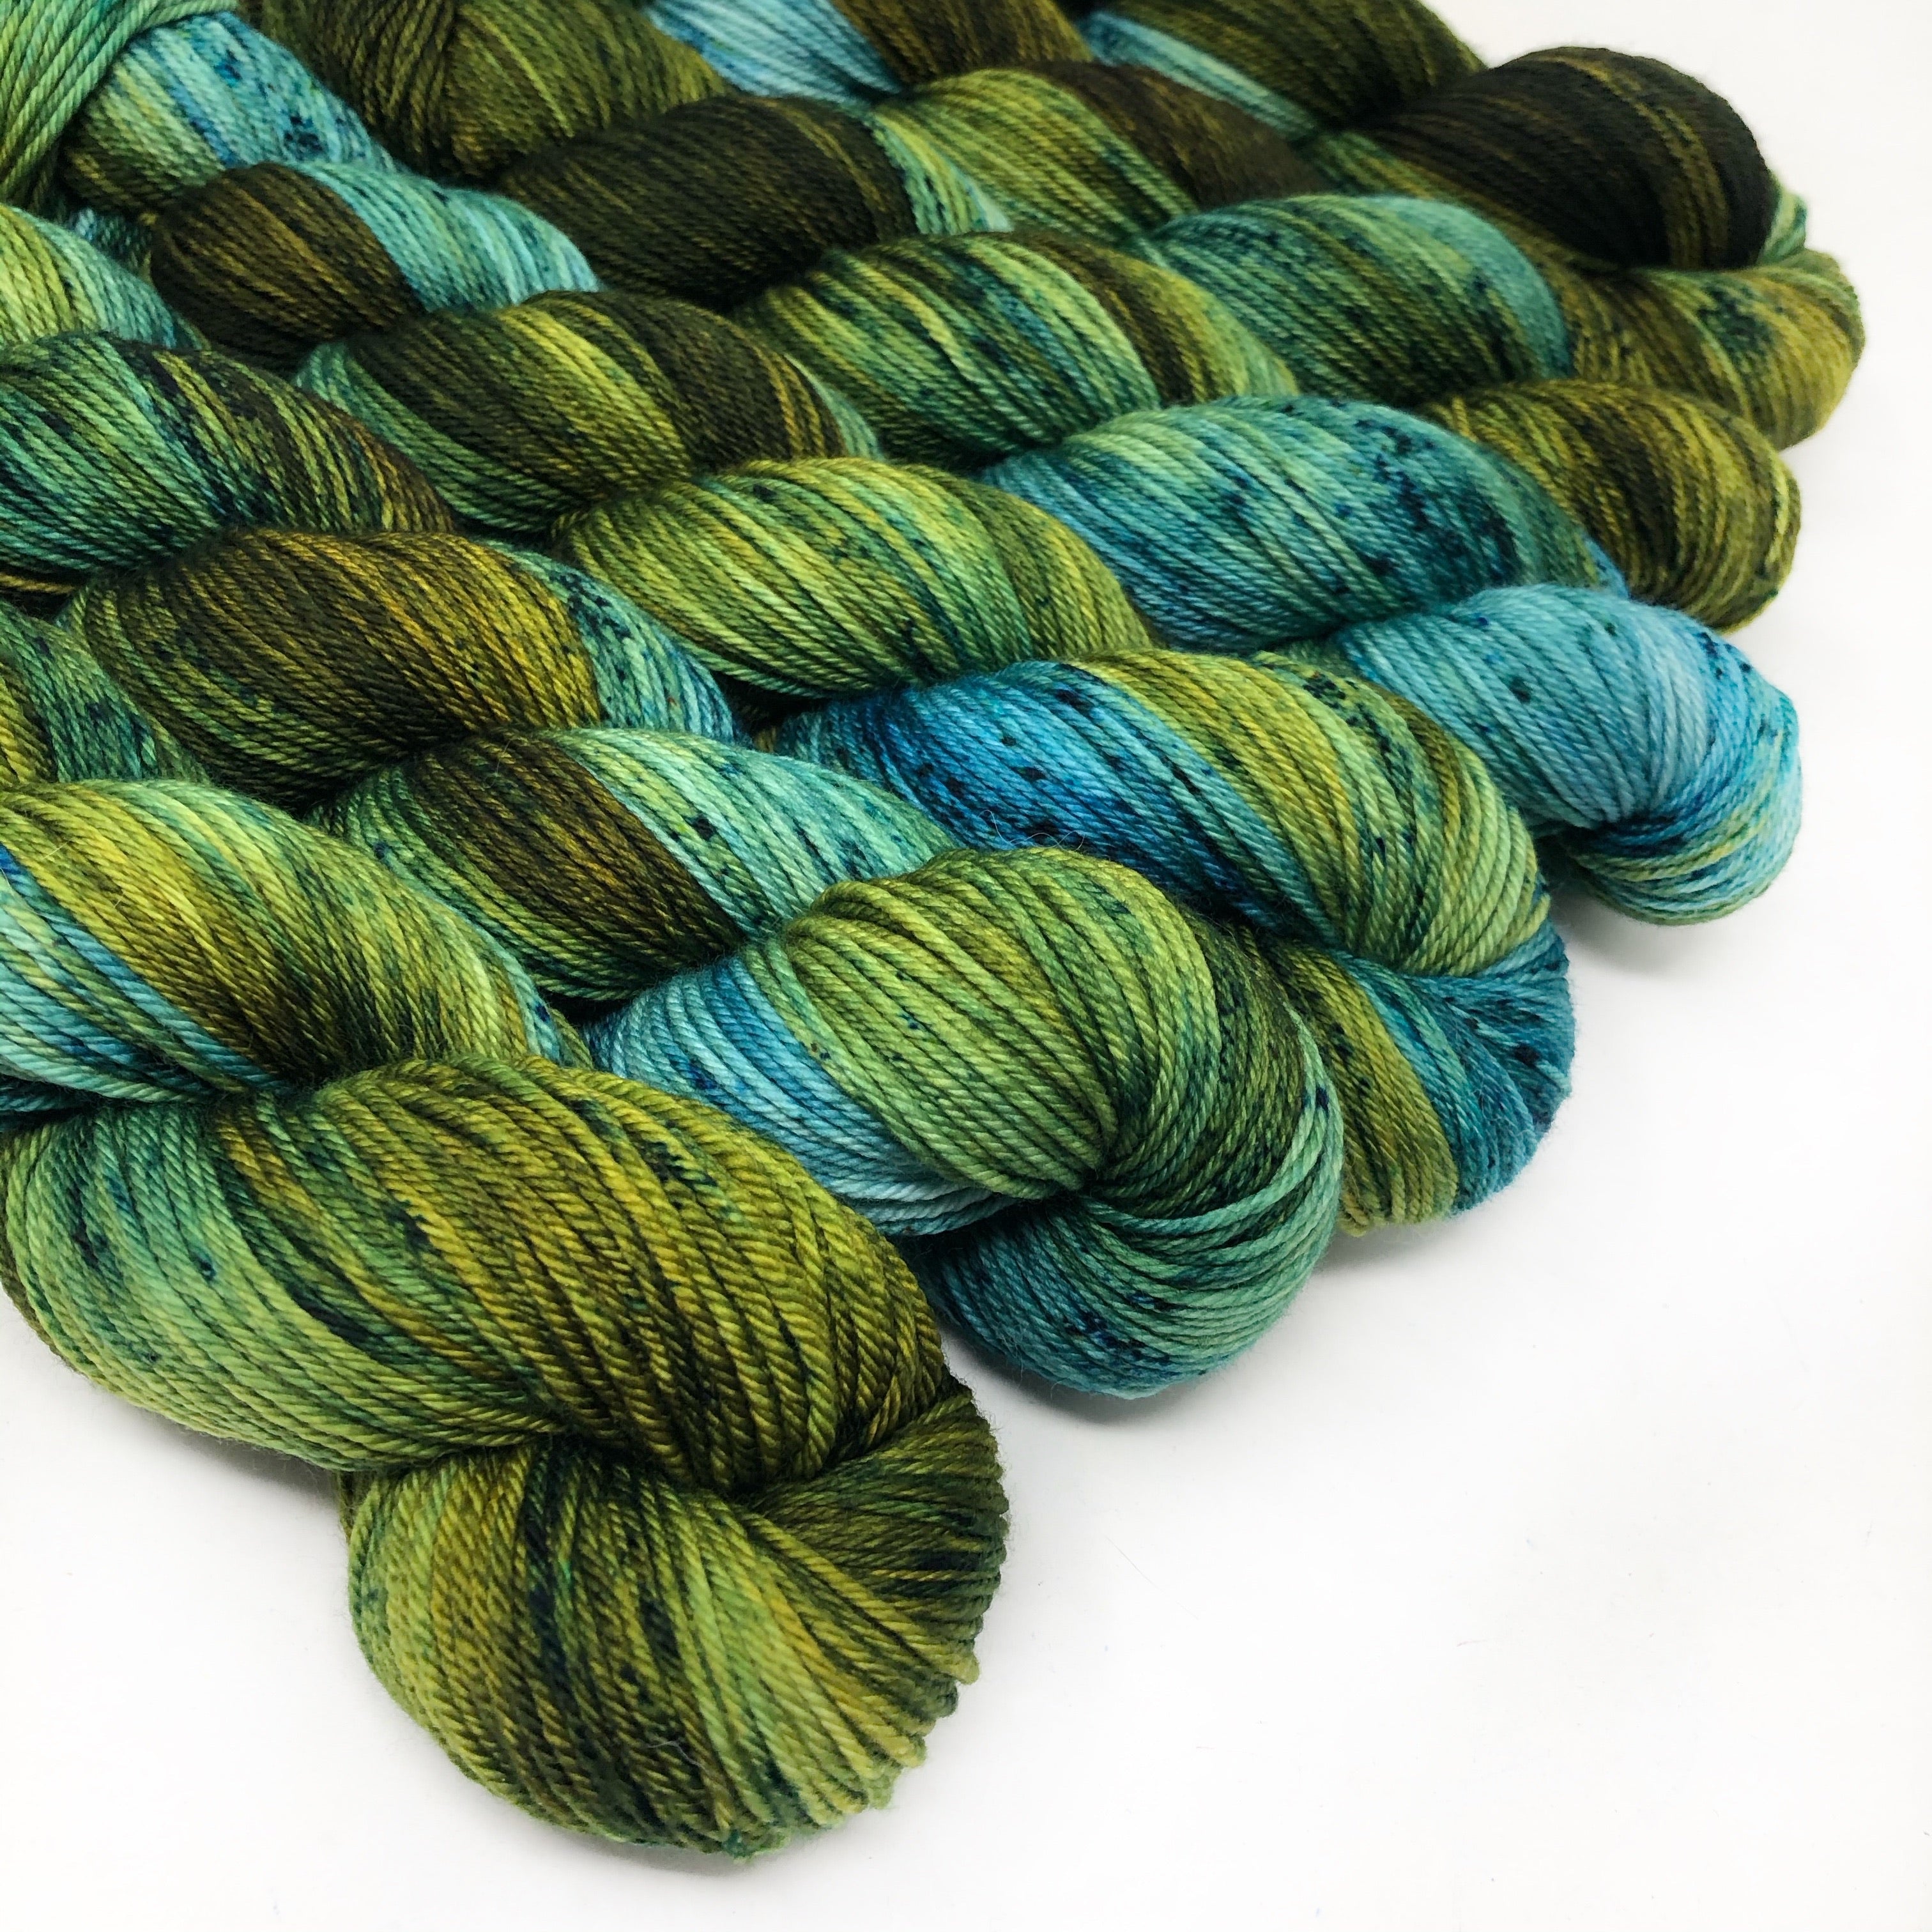 Algae - Delightful DK - the perfect sweater yarn